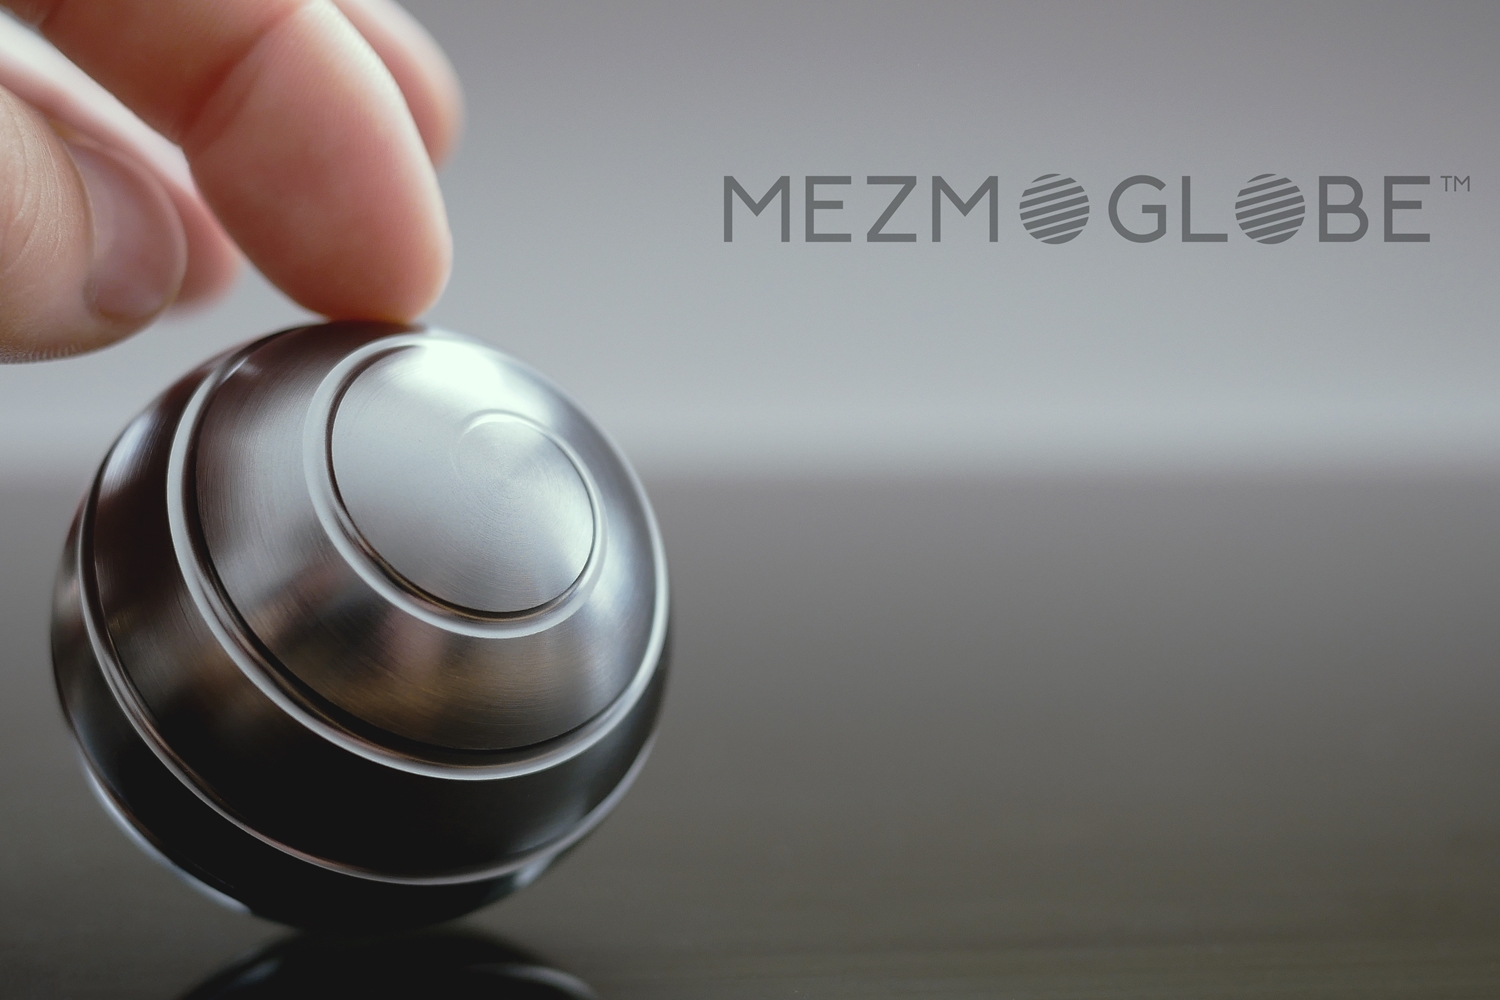 mezmoglobe spinning desk toy kickstarter globe5